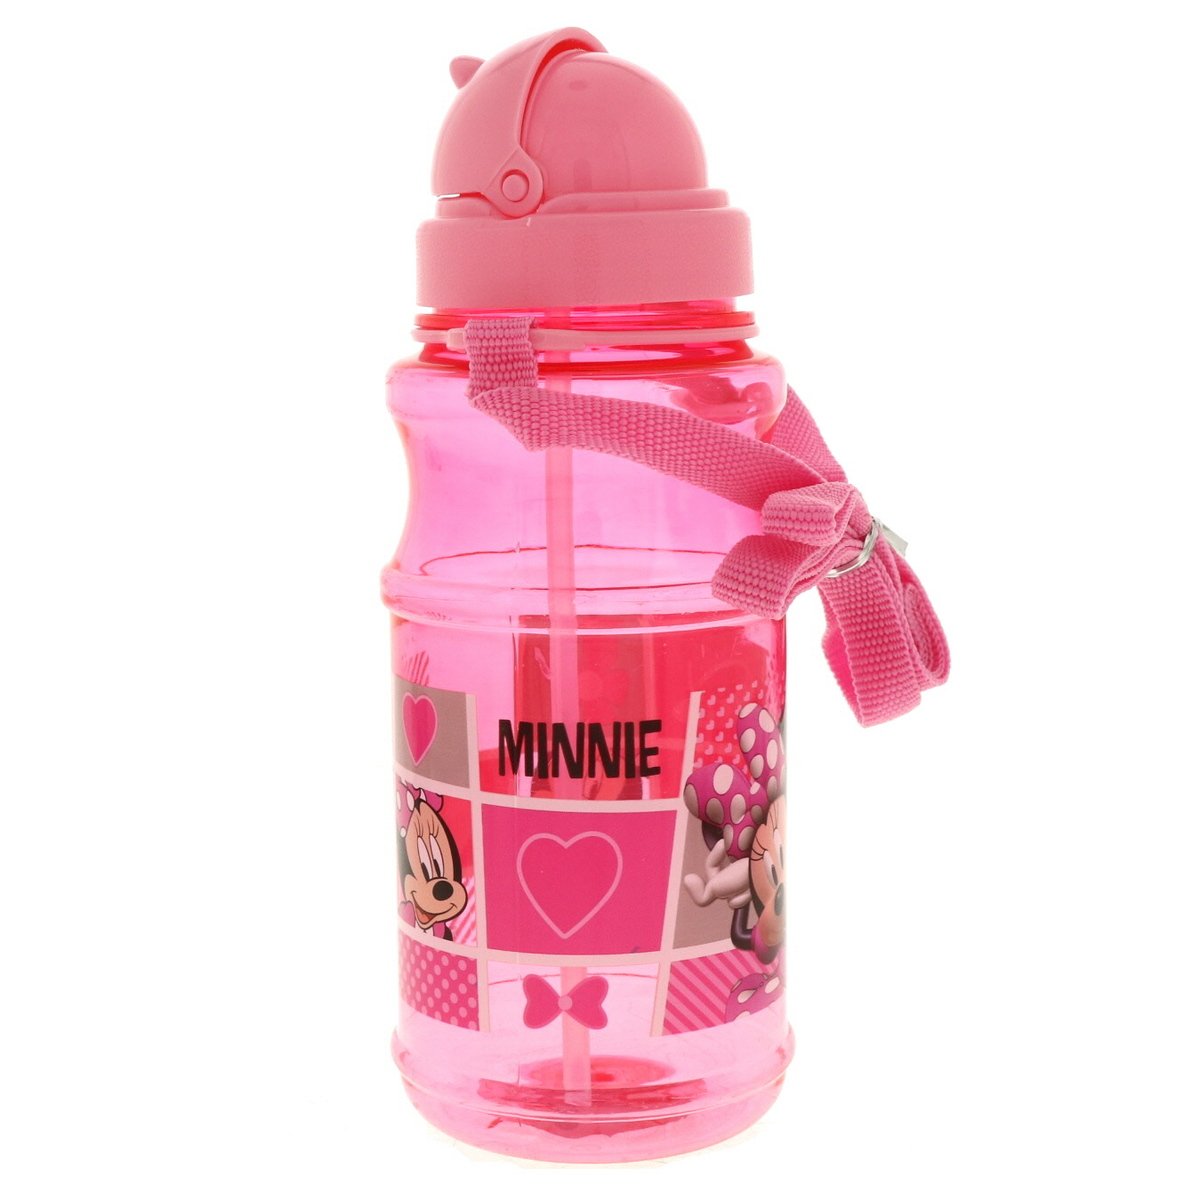 Minnie Mouse Water Bottle Transparent 112-34-0912